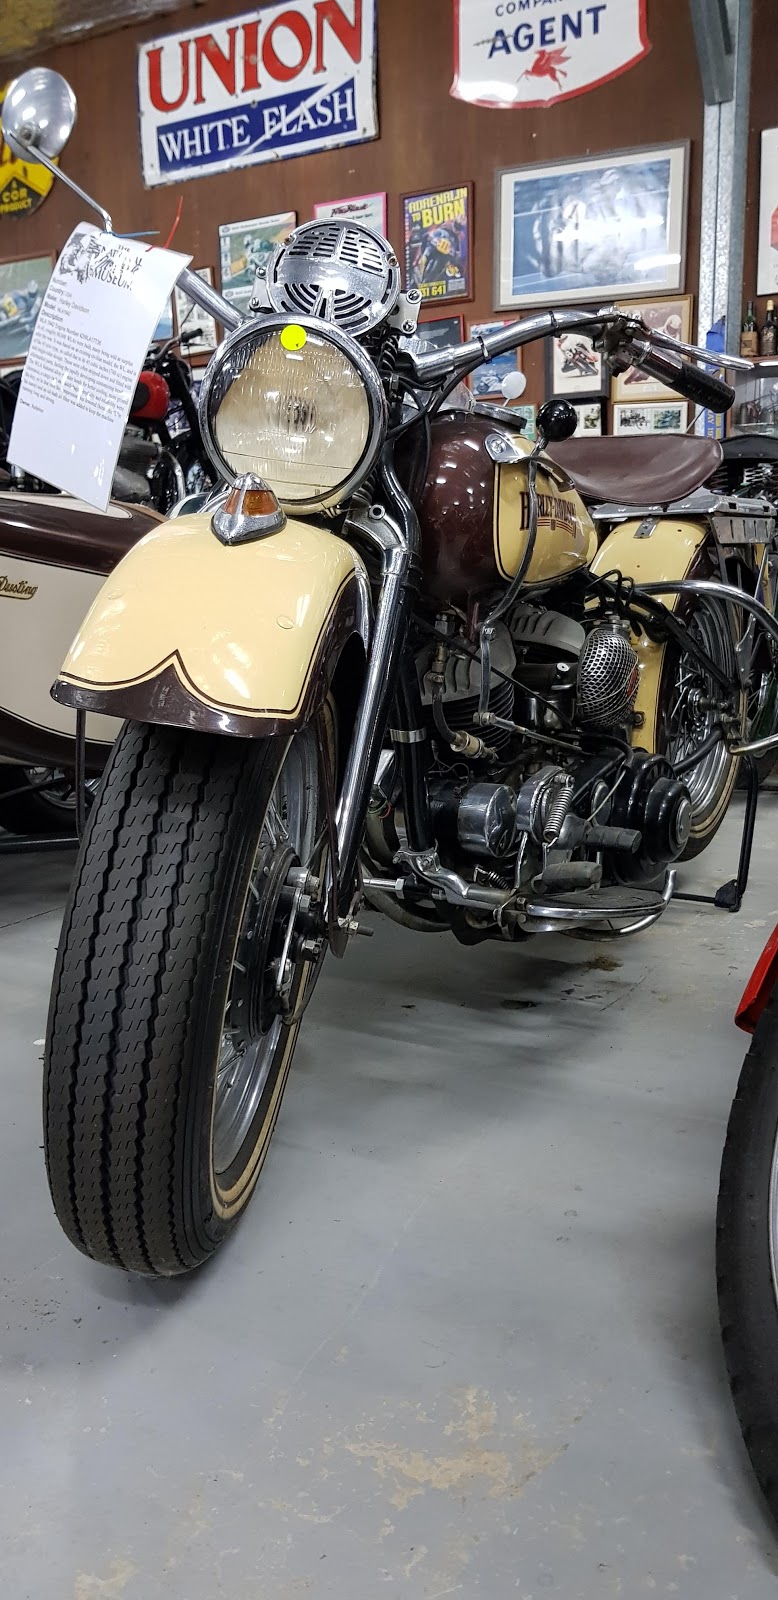 nabiac motorcycle museum | lodging | Pacific Hwy, Nabiac NSW 2312, Australia